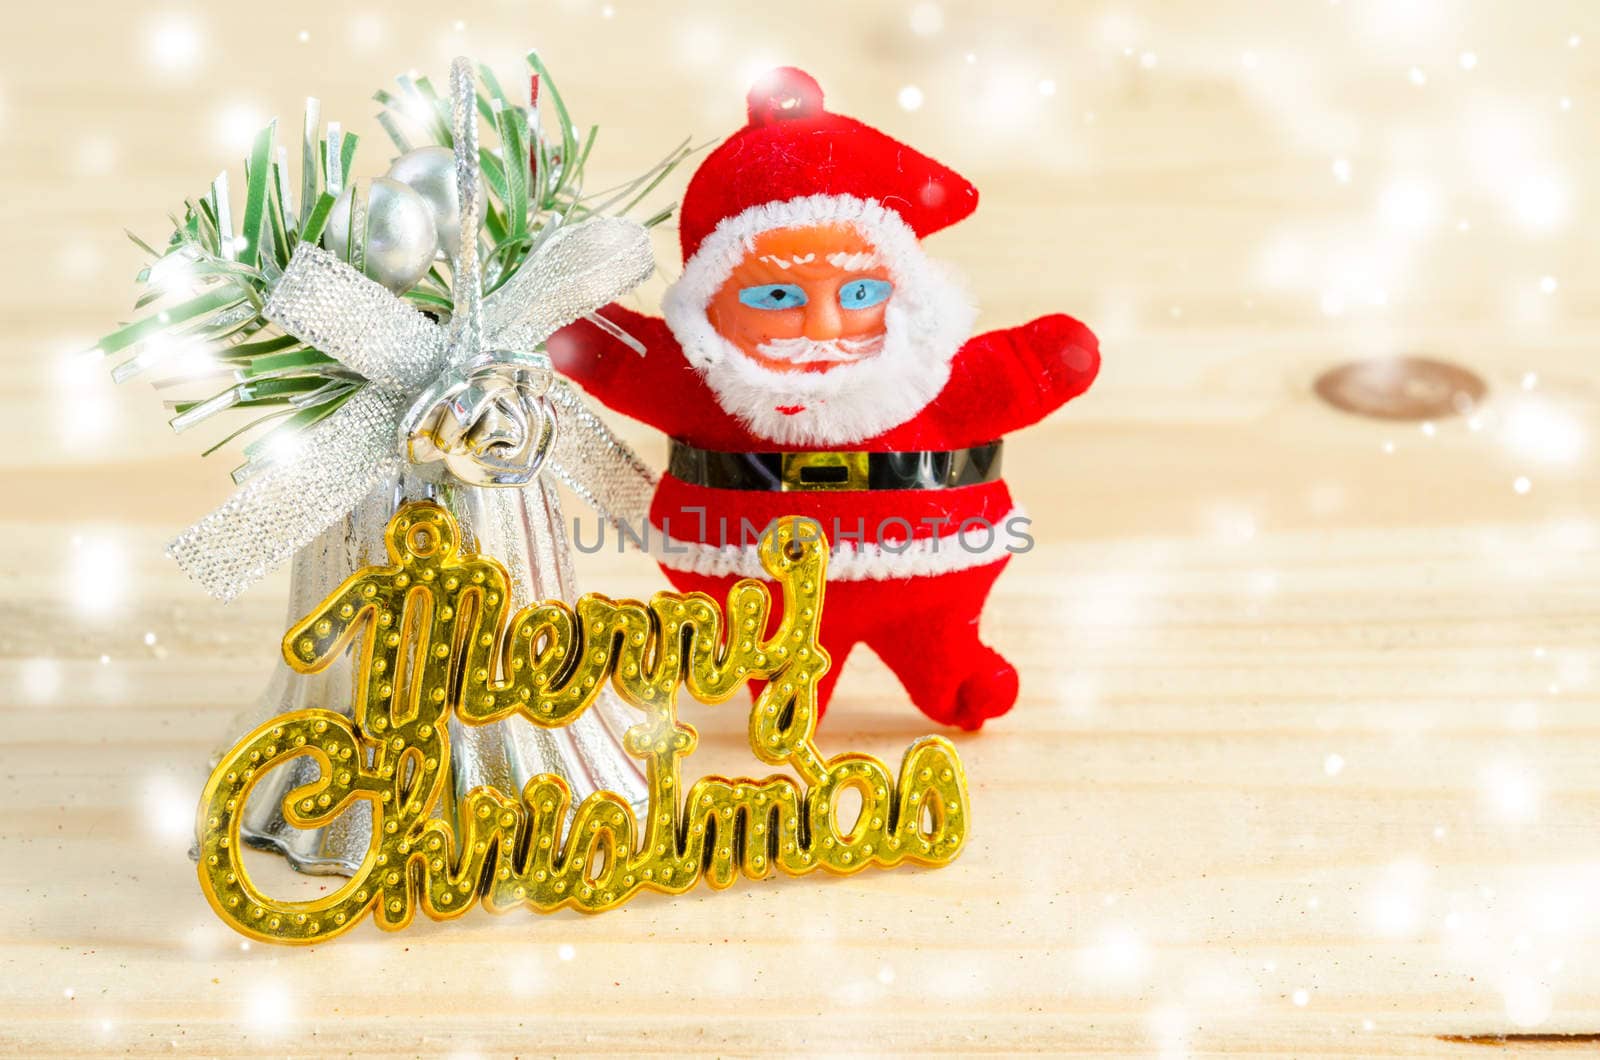 Xmas day: Merry christmas wording and santa doll by Gamjai